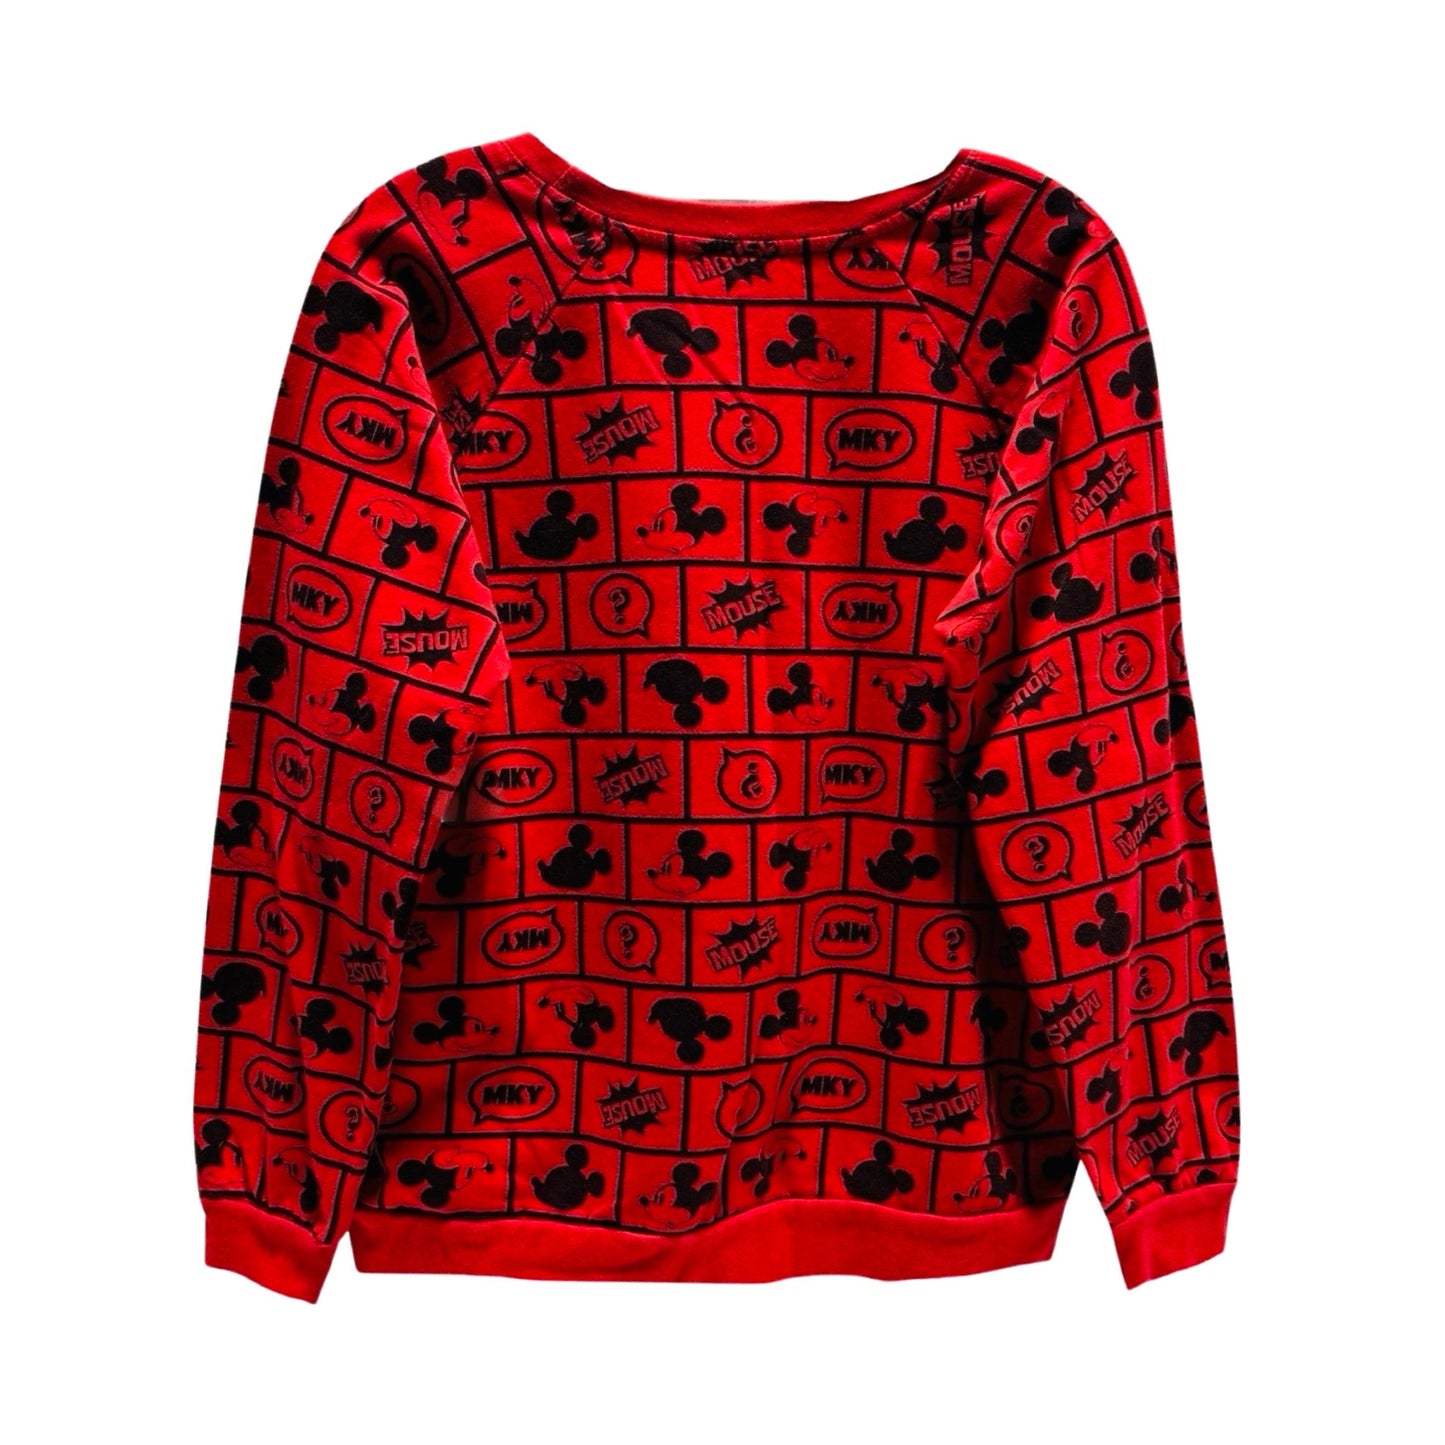 Disney Mickey Mouse Red & Black Sweatshirt Crewneck By Disney Store  Size: L